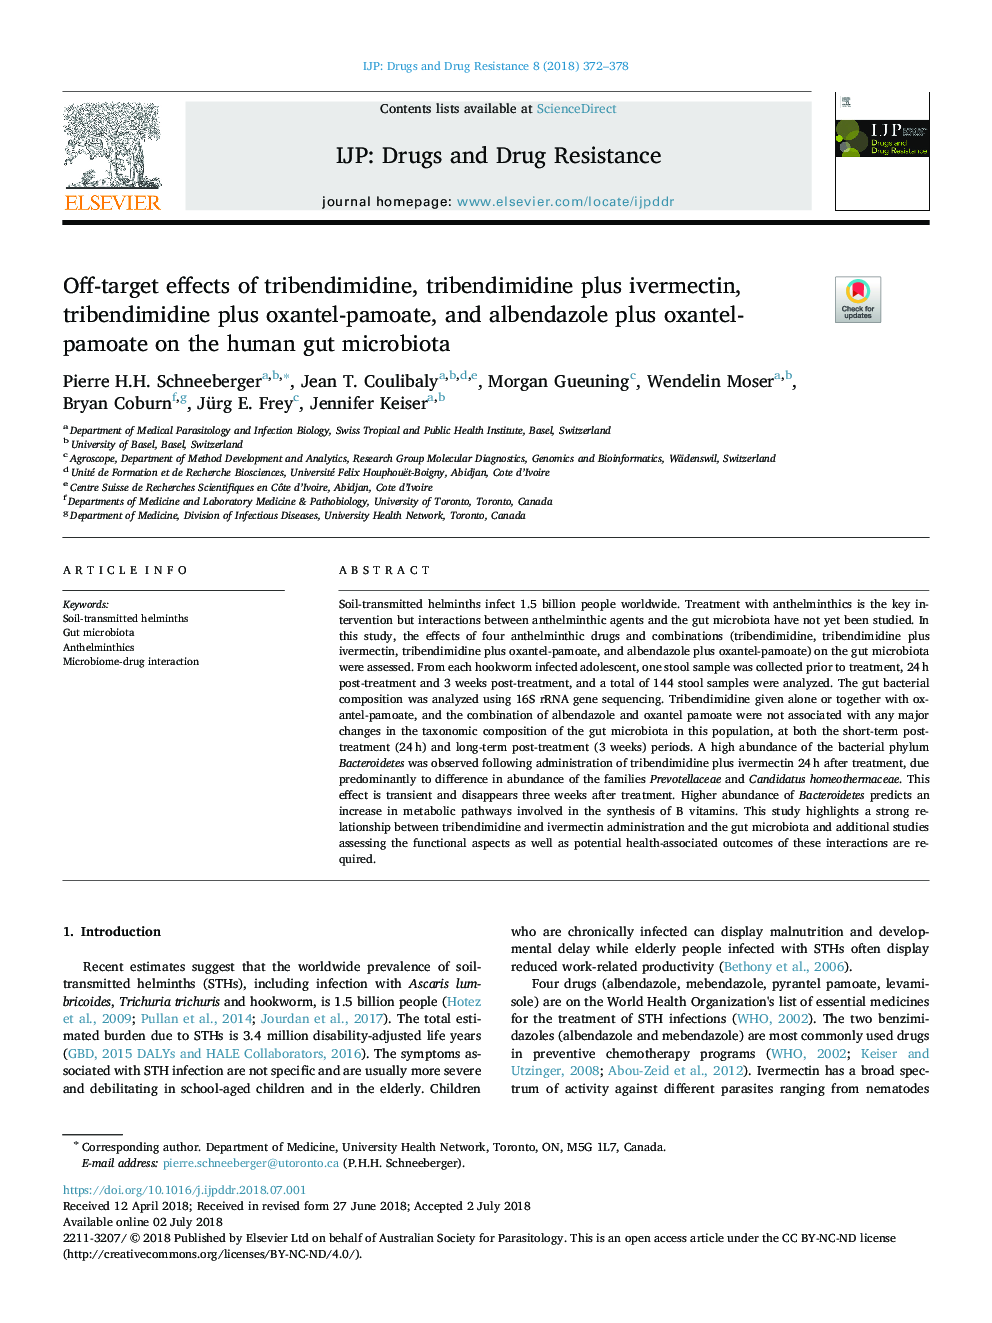 Off-target effects of tribendimidine, tribendimidine plus ivermectin, tribendimidine plus oxantel-pamoate, and albendazole plus oxantel-pamoate on the human gut microbiota